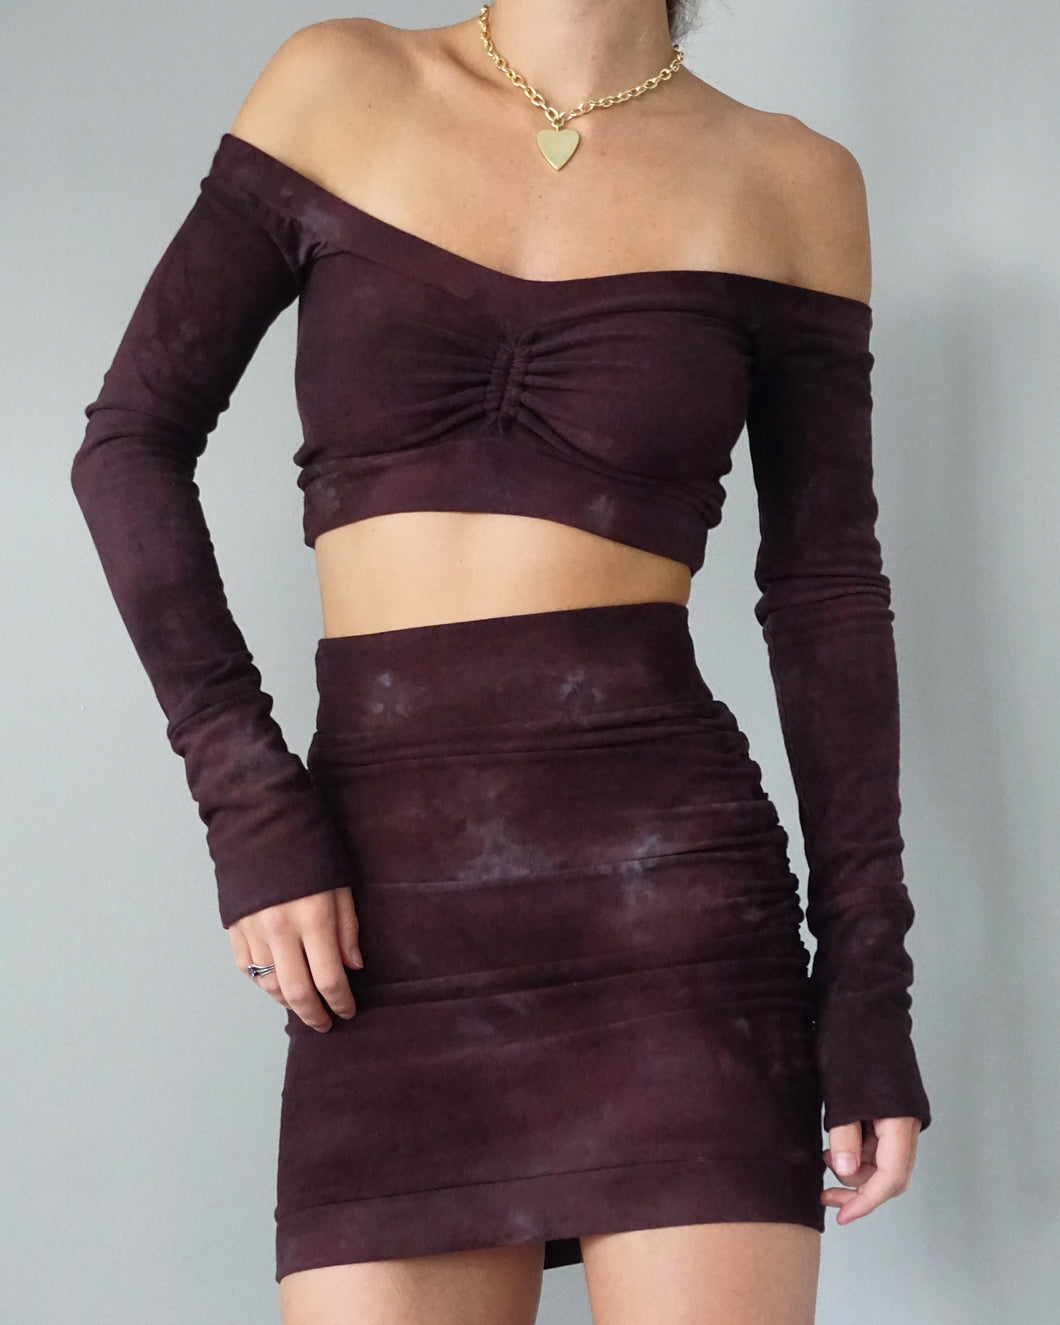 Size large set - chocolatey purple brown equinox + skirt